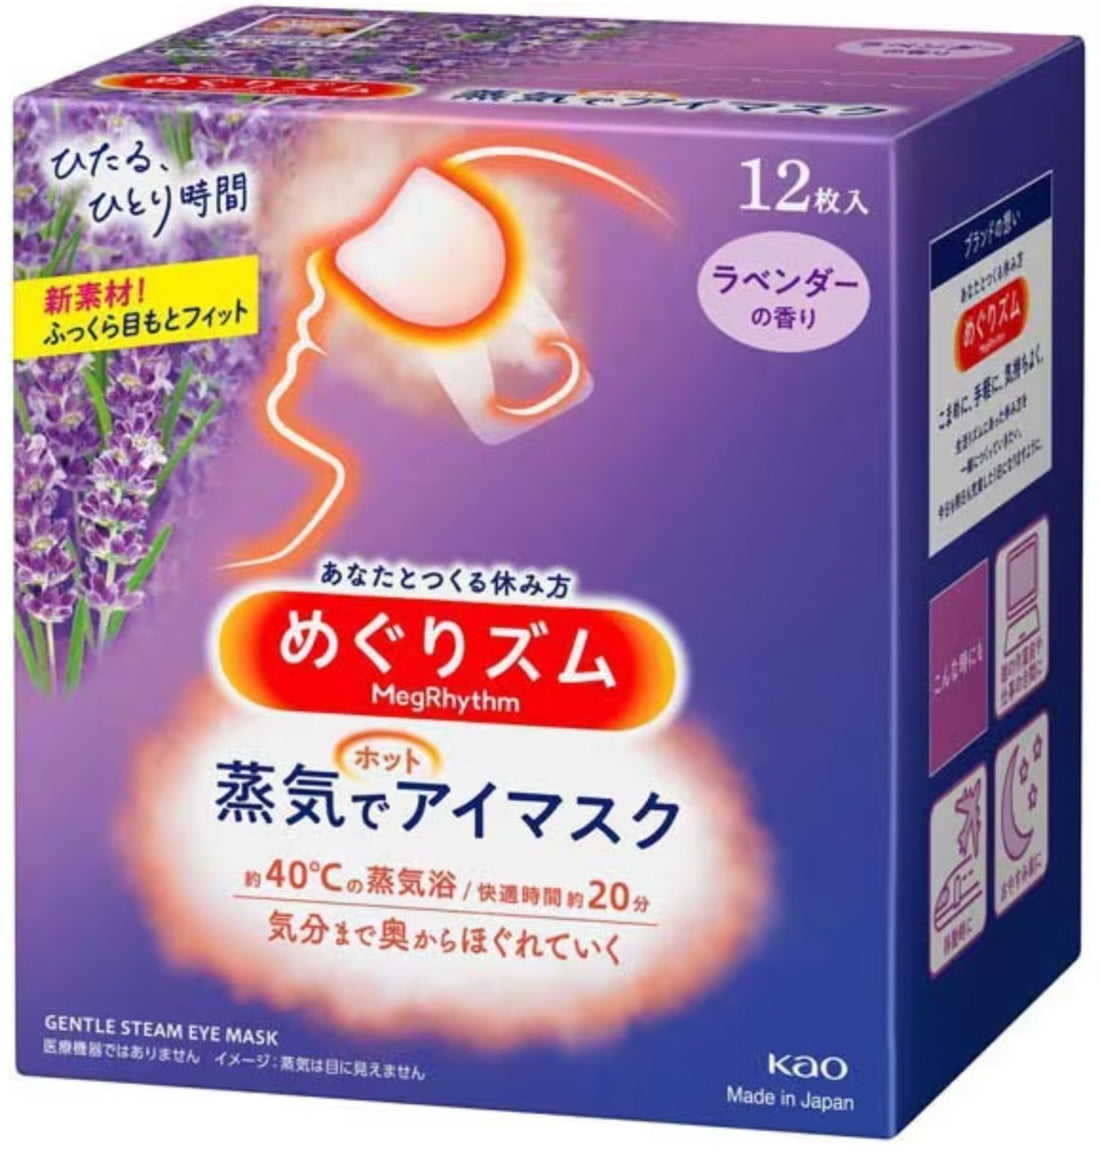 Kao Megrhythm Hot Steam Eye Mask 12 sheets - Lavender - NihonMura